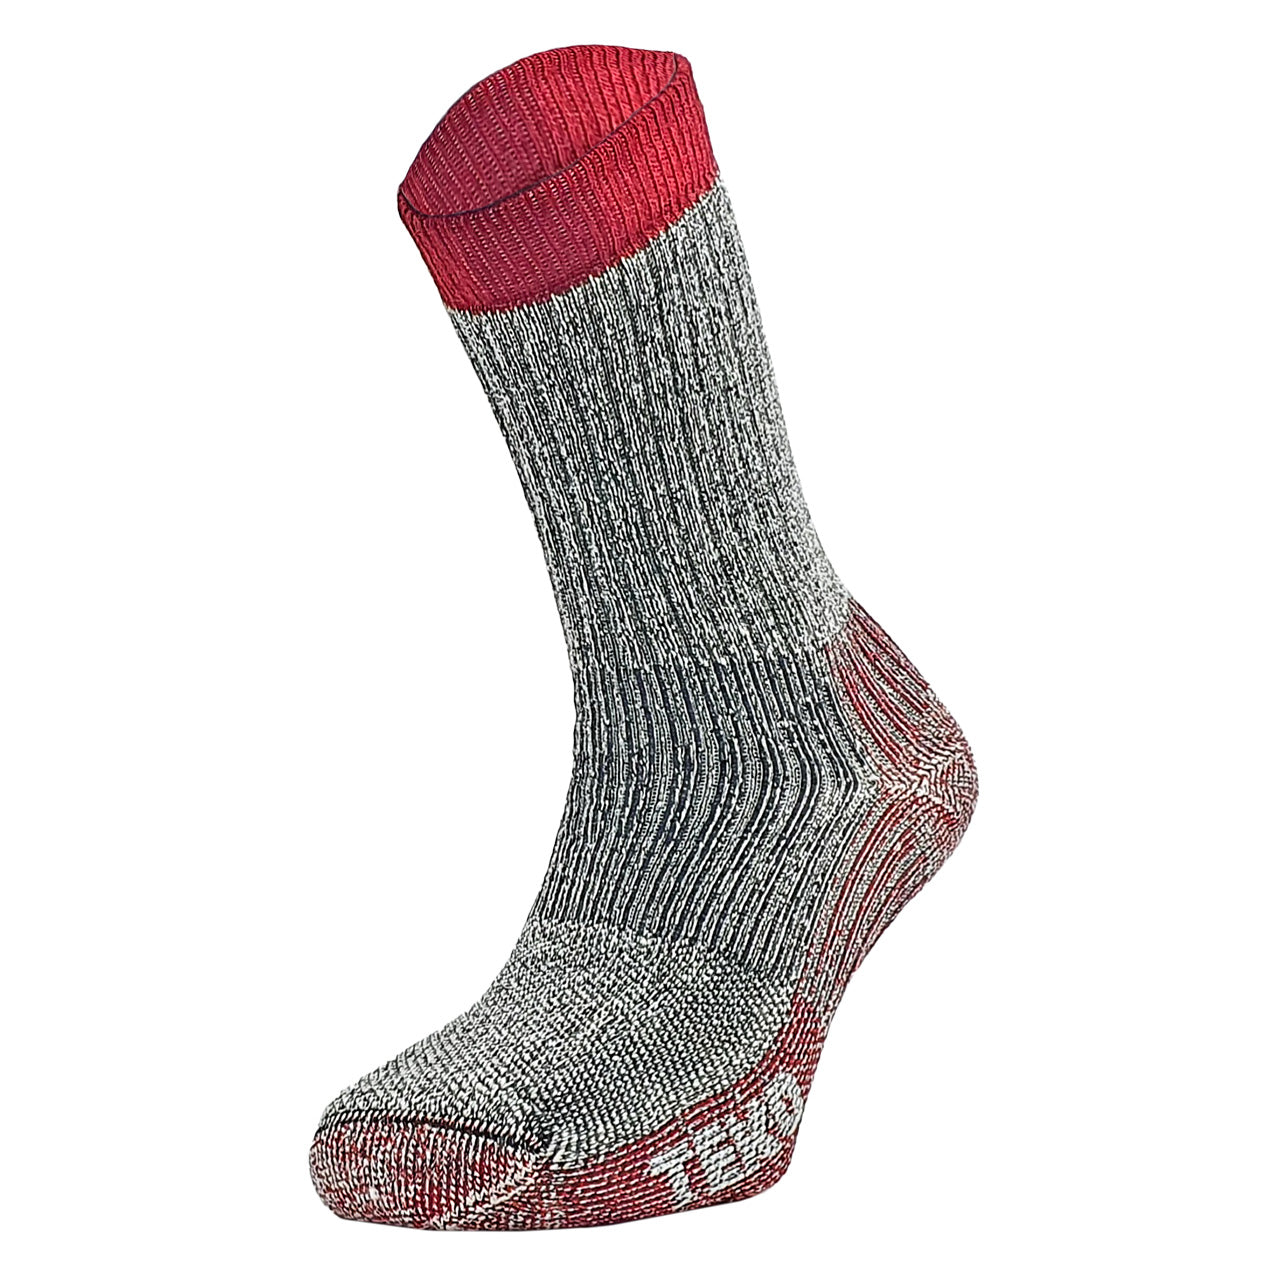 Merino Wool Hiking Socks - Made in USA - Sleet & Sole